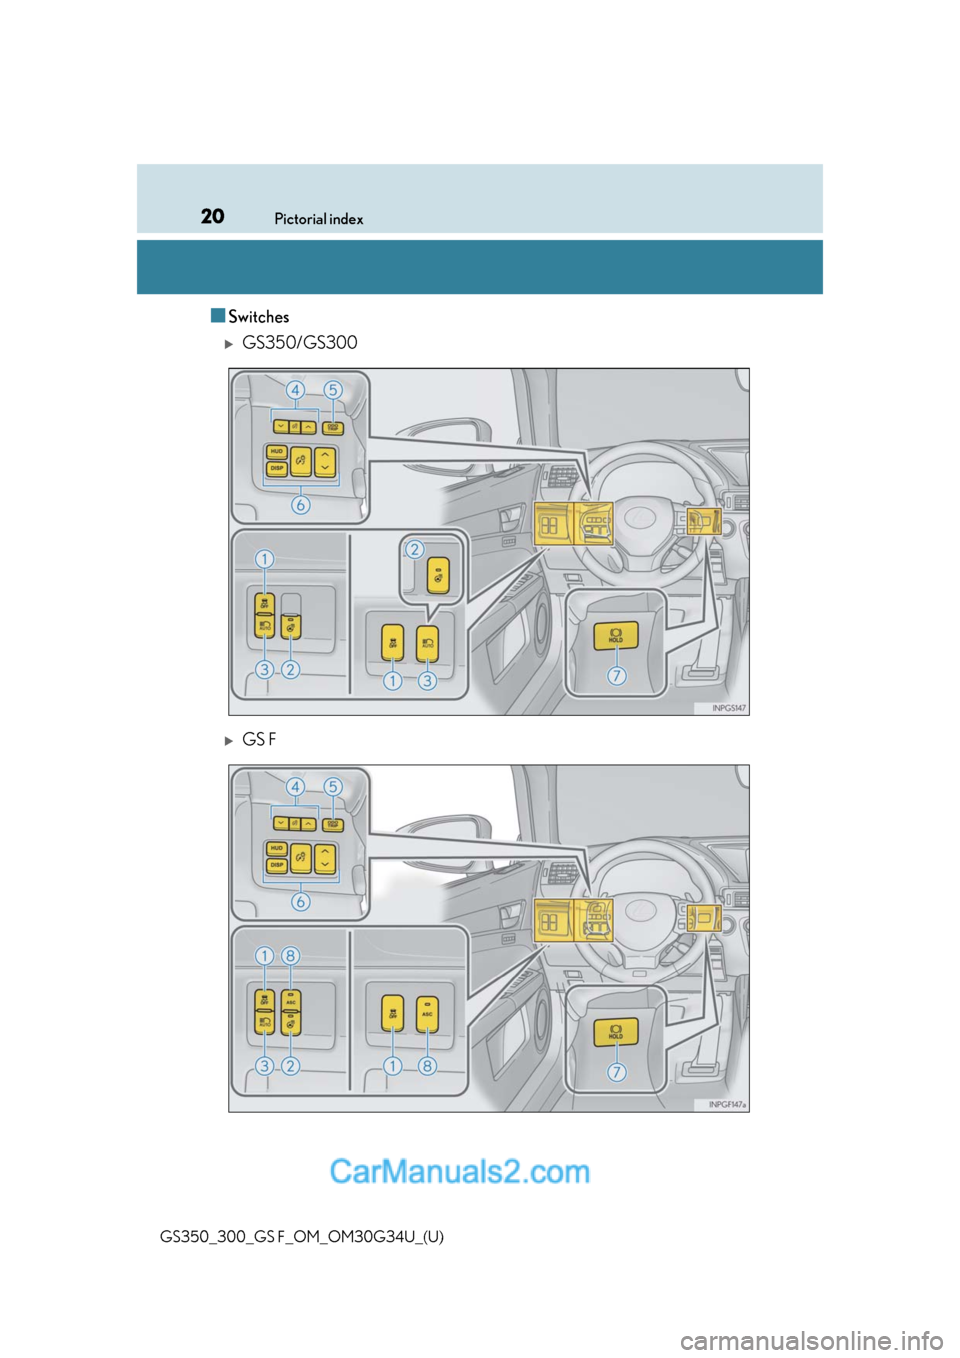 Lexus GS300 2018  s User Guide 20Pictorial index
GS350_300_GS F_OM_OM30G34U_(U)
■Switches
GS350/GS300
GS F  